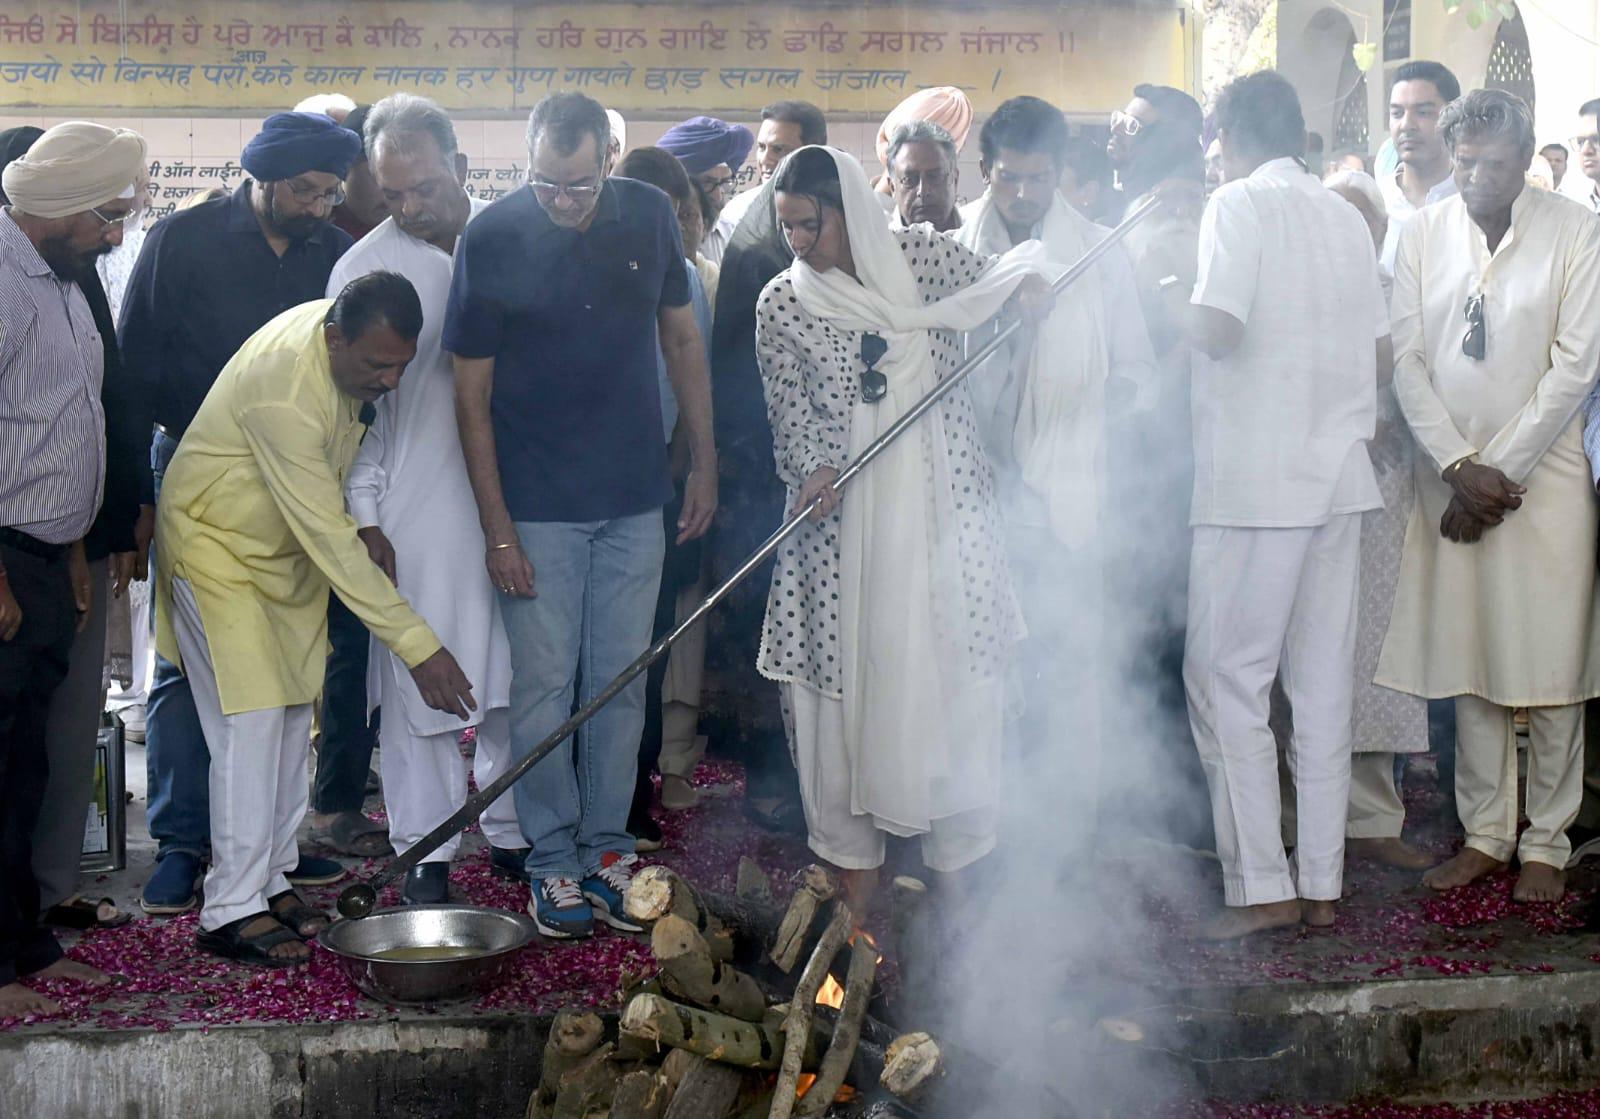 Bishan Singh Bedi's daughter-in-law and actress Neha Dhupia took part in the final ritual